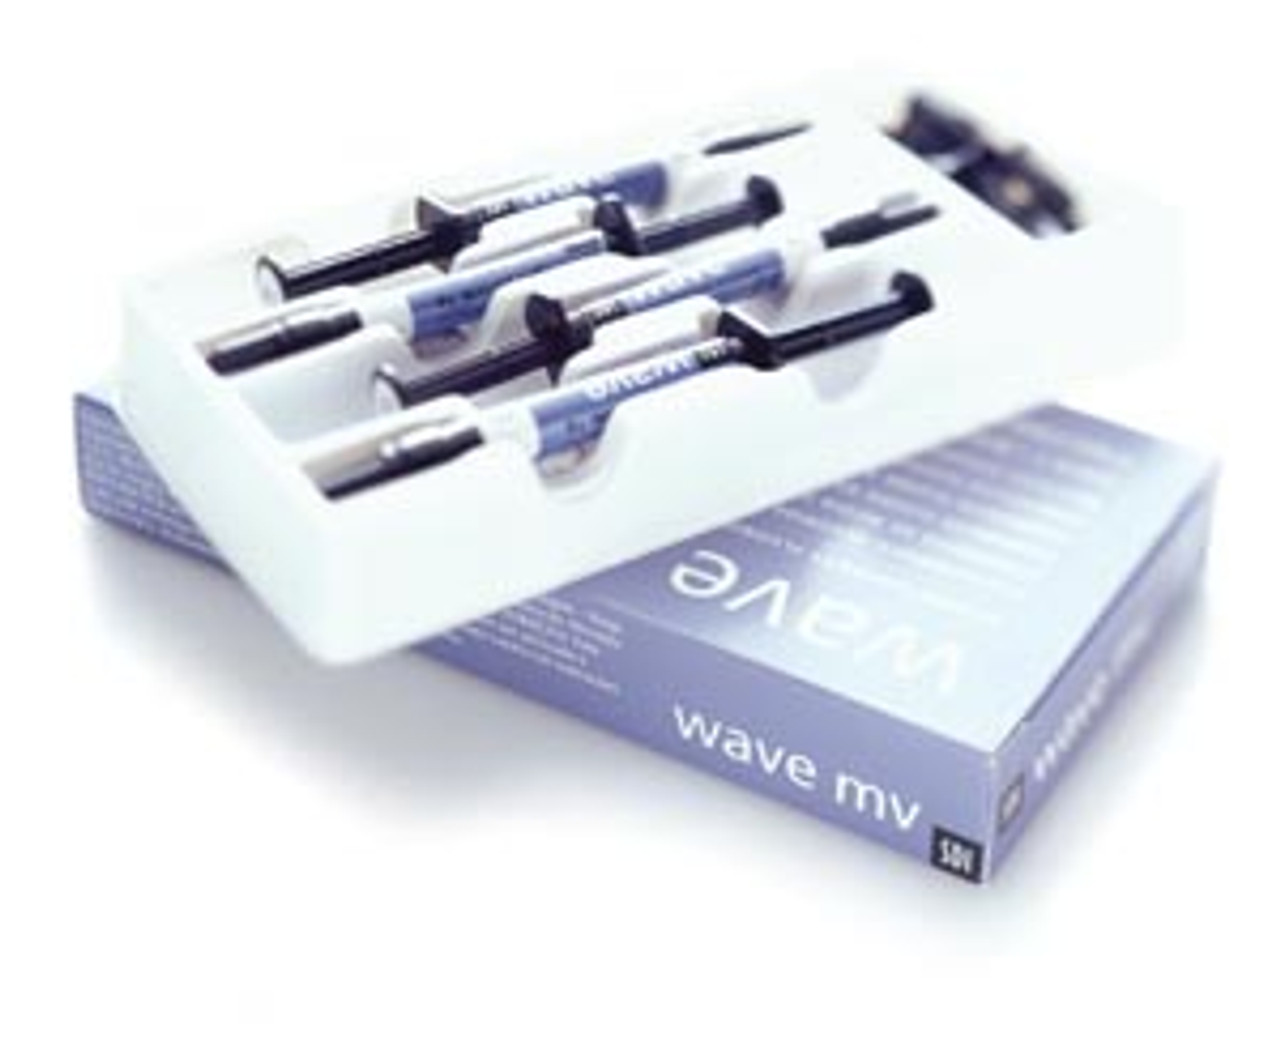 SDI Wave Flowable Composites, Wave MV Syringe Refill - Shade A3.5 Dark Yellow, 1 x 1g Syringe, 5 Applicator Tips 8310405